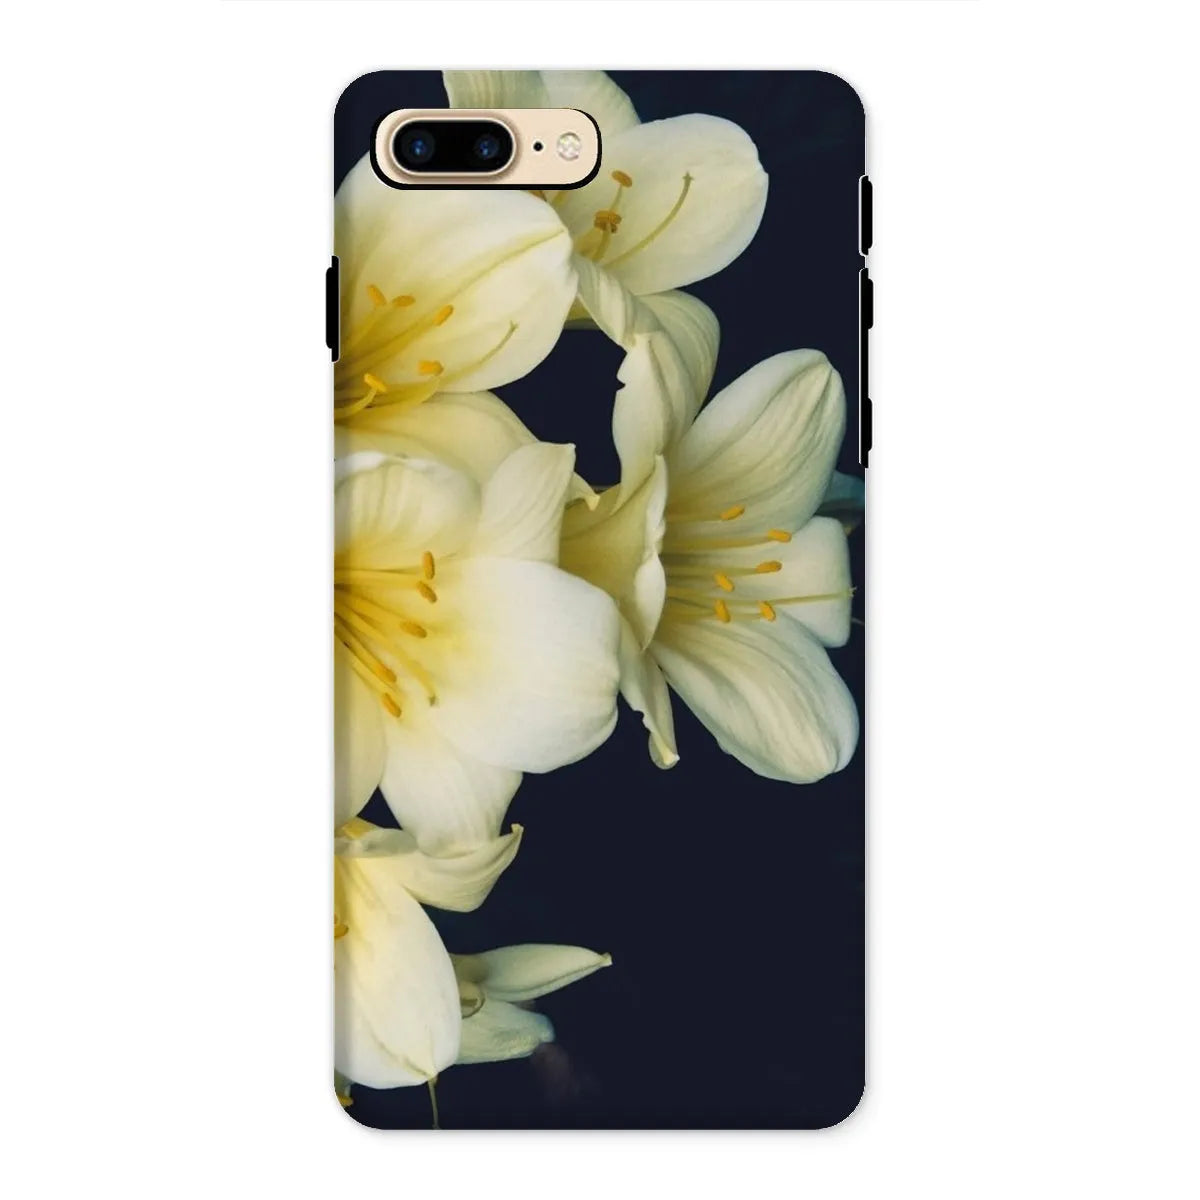 Flower Power Too Tough Phone Case - Iphone 8 Plus / Matte - Mobile Phone Cases - Aesthetic Art